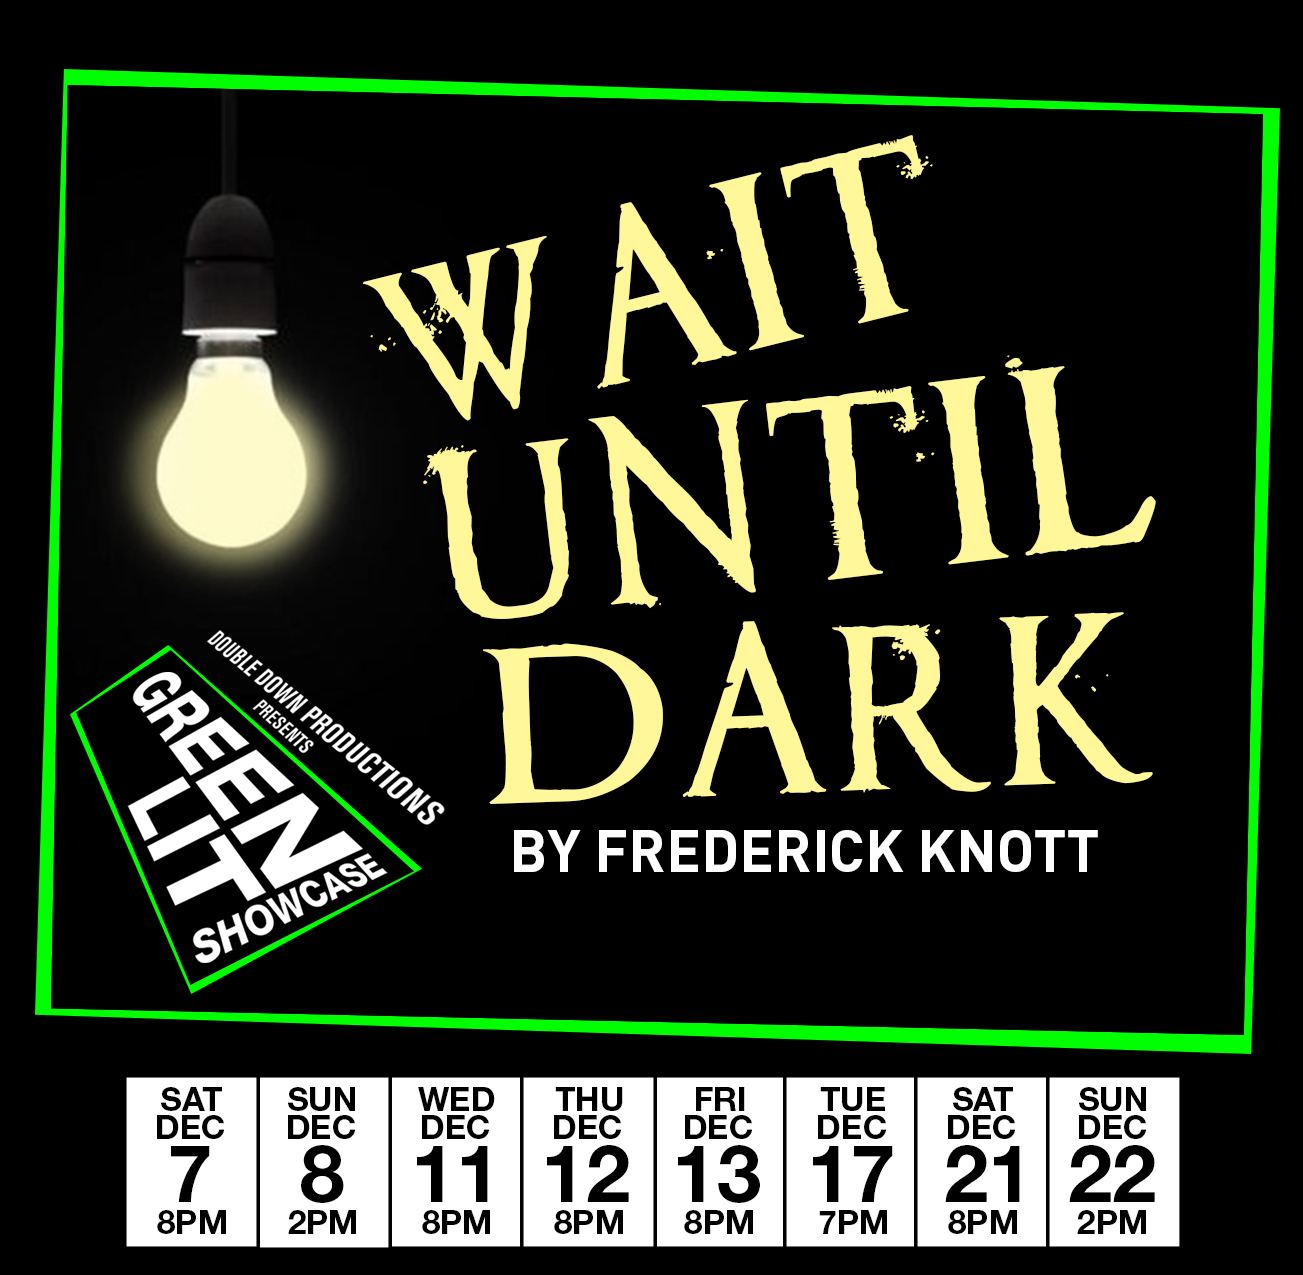 Wait Until Dark - Thu Dec 12th